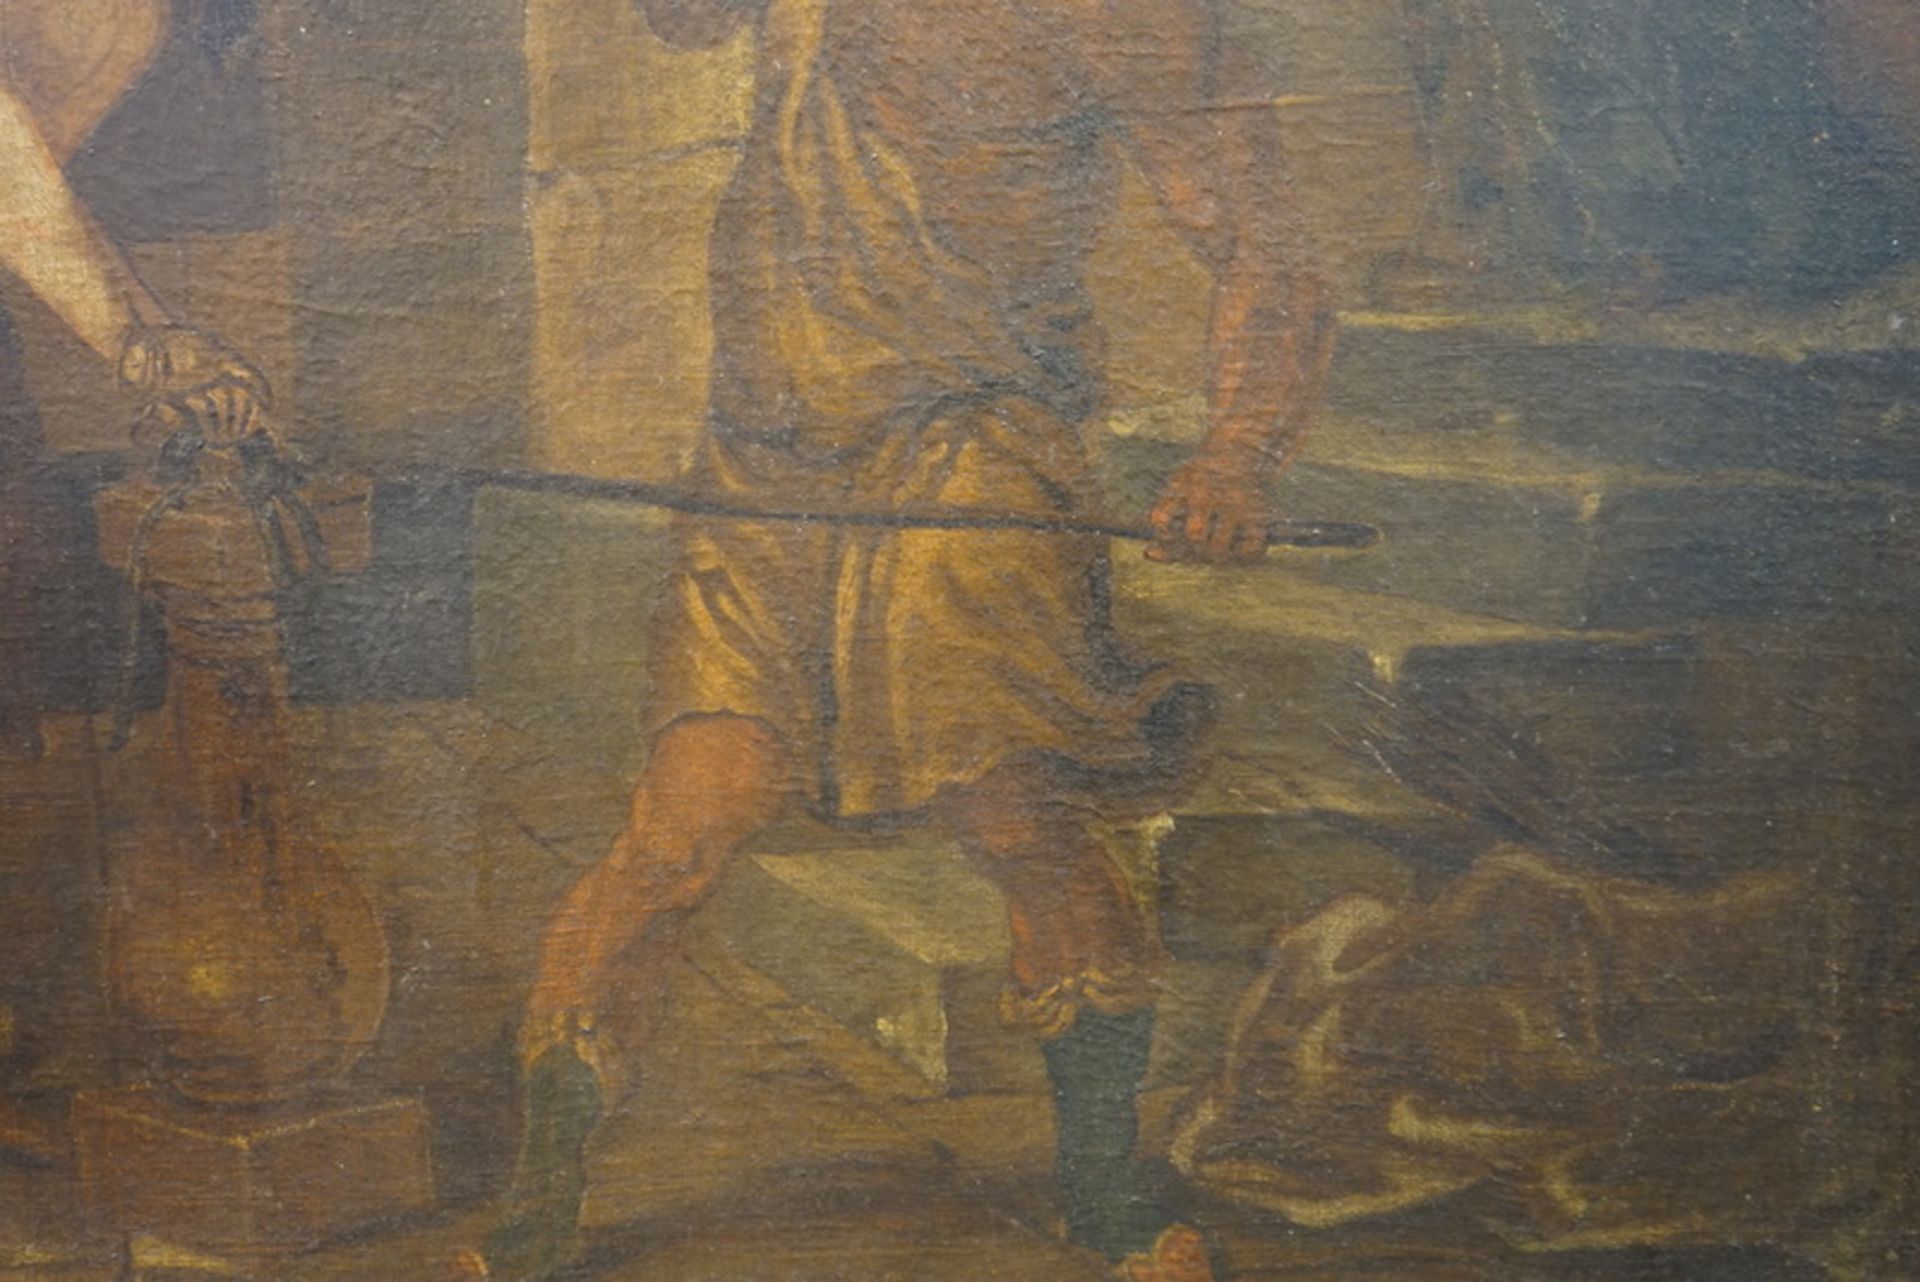 Geisselung Christi, um 1700 - Image 4 of 7